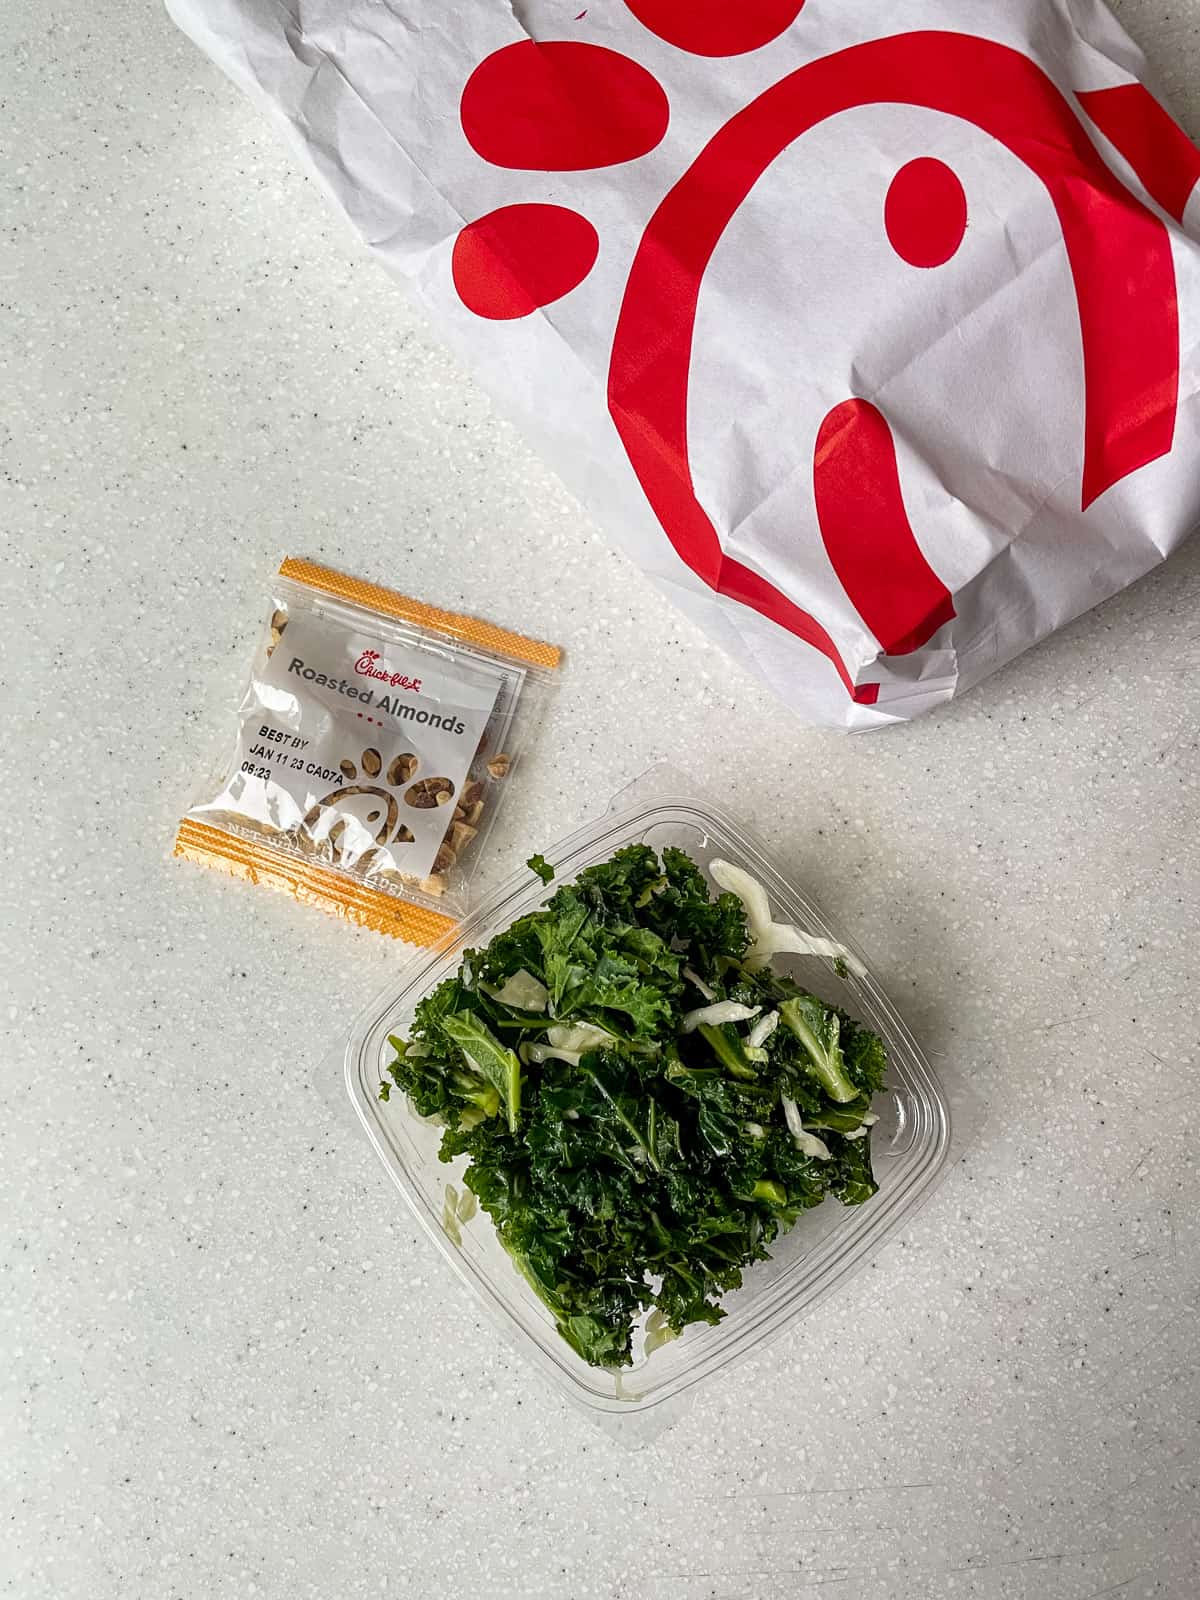 Process chick-fil-a kale crunch salad with bag